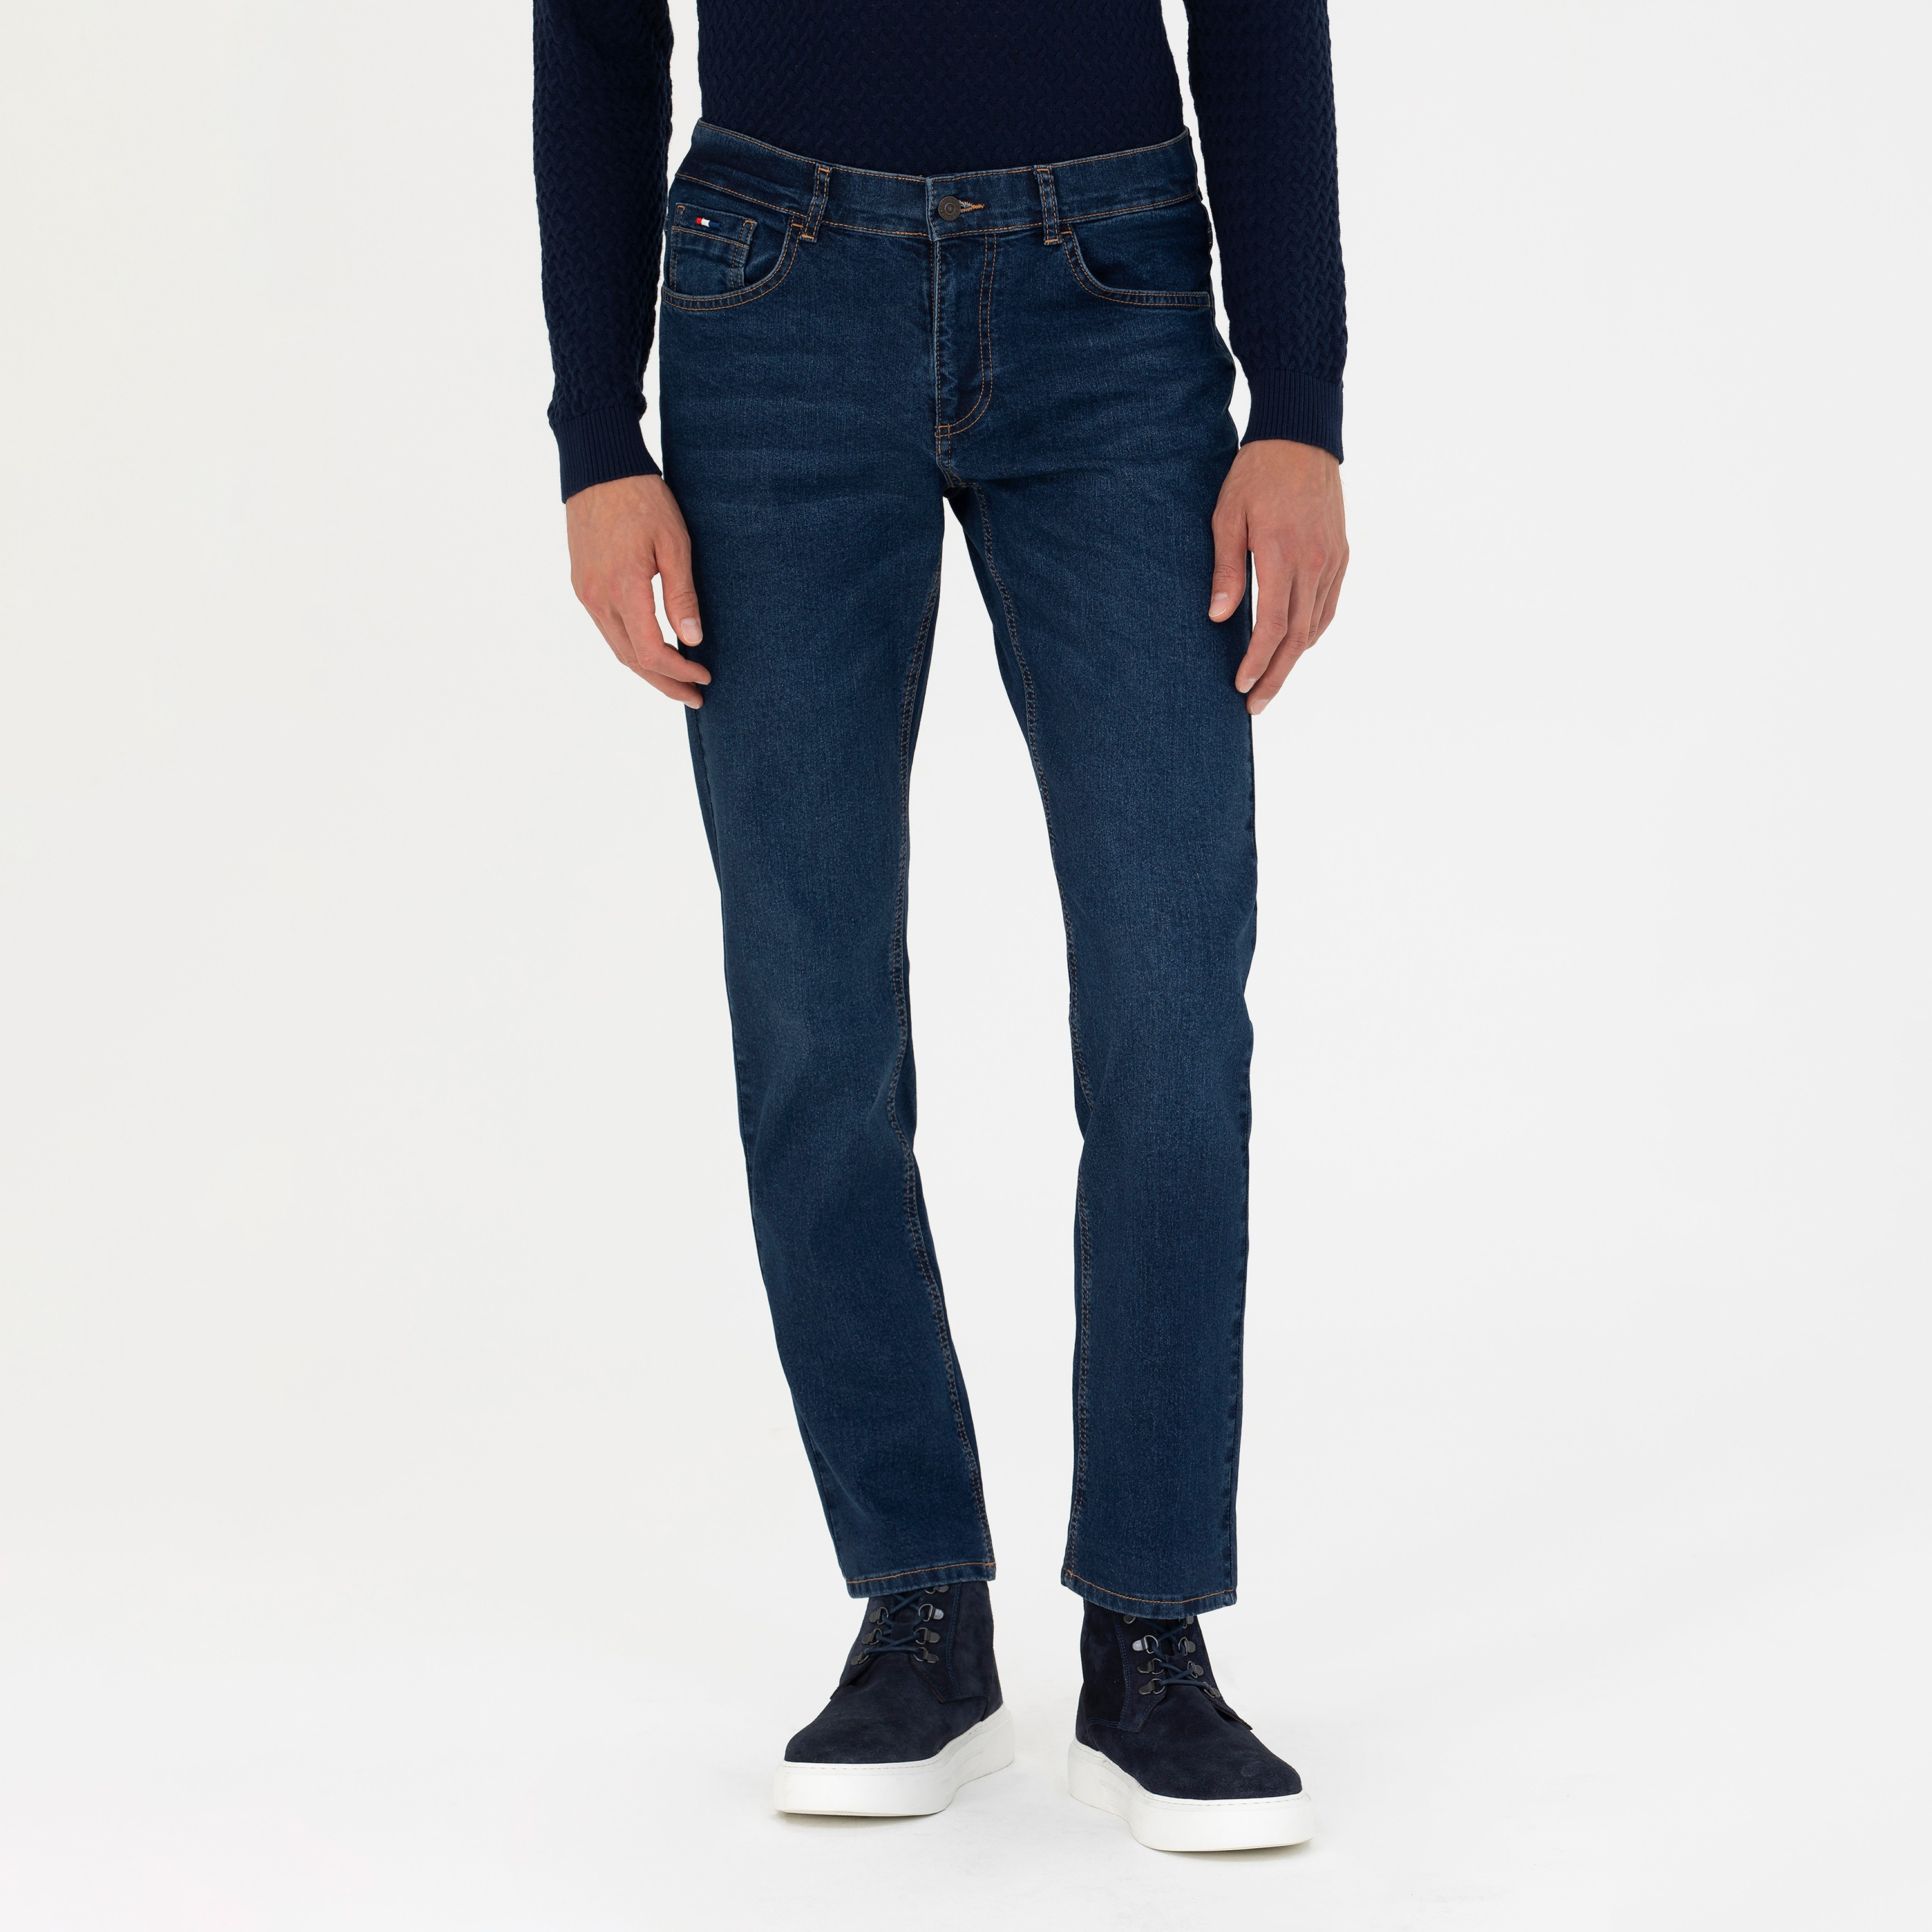 Buy U.S. Polo Assn. Denim Co. Stone Wash Slim Straight Fit Jeans Blue online